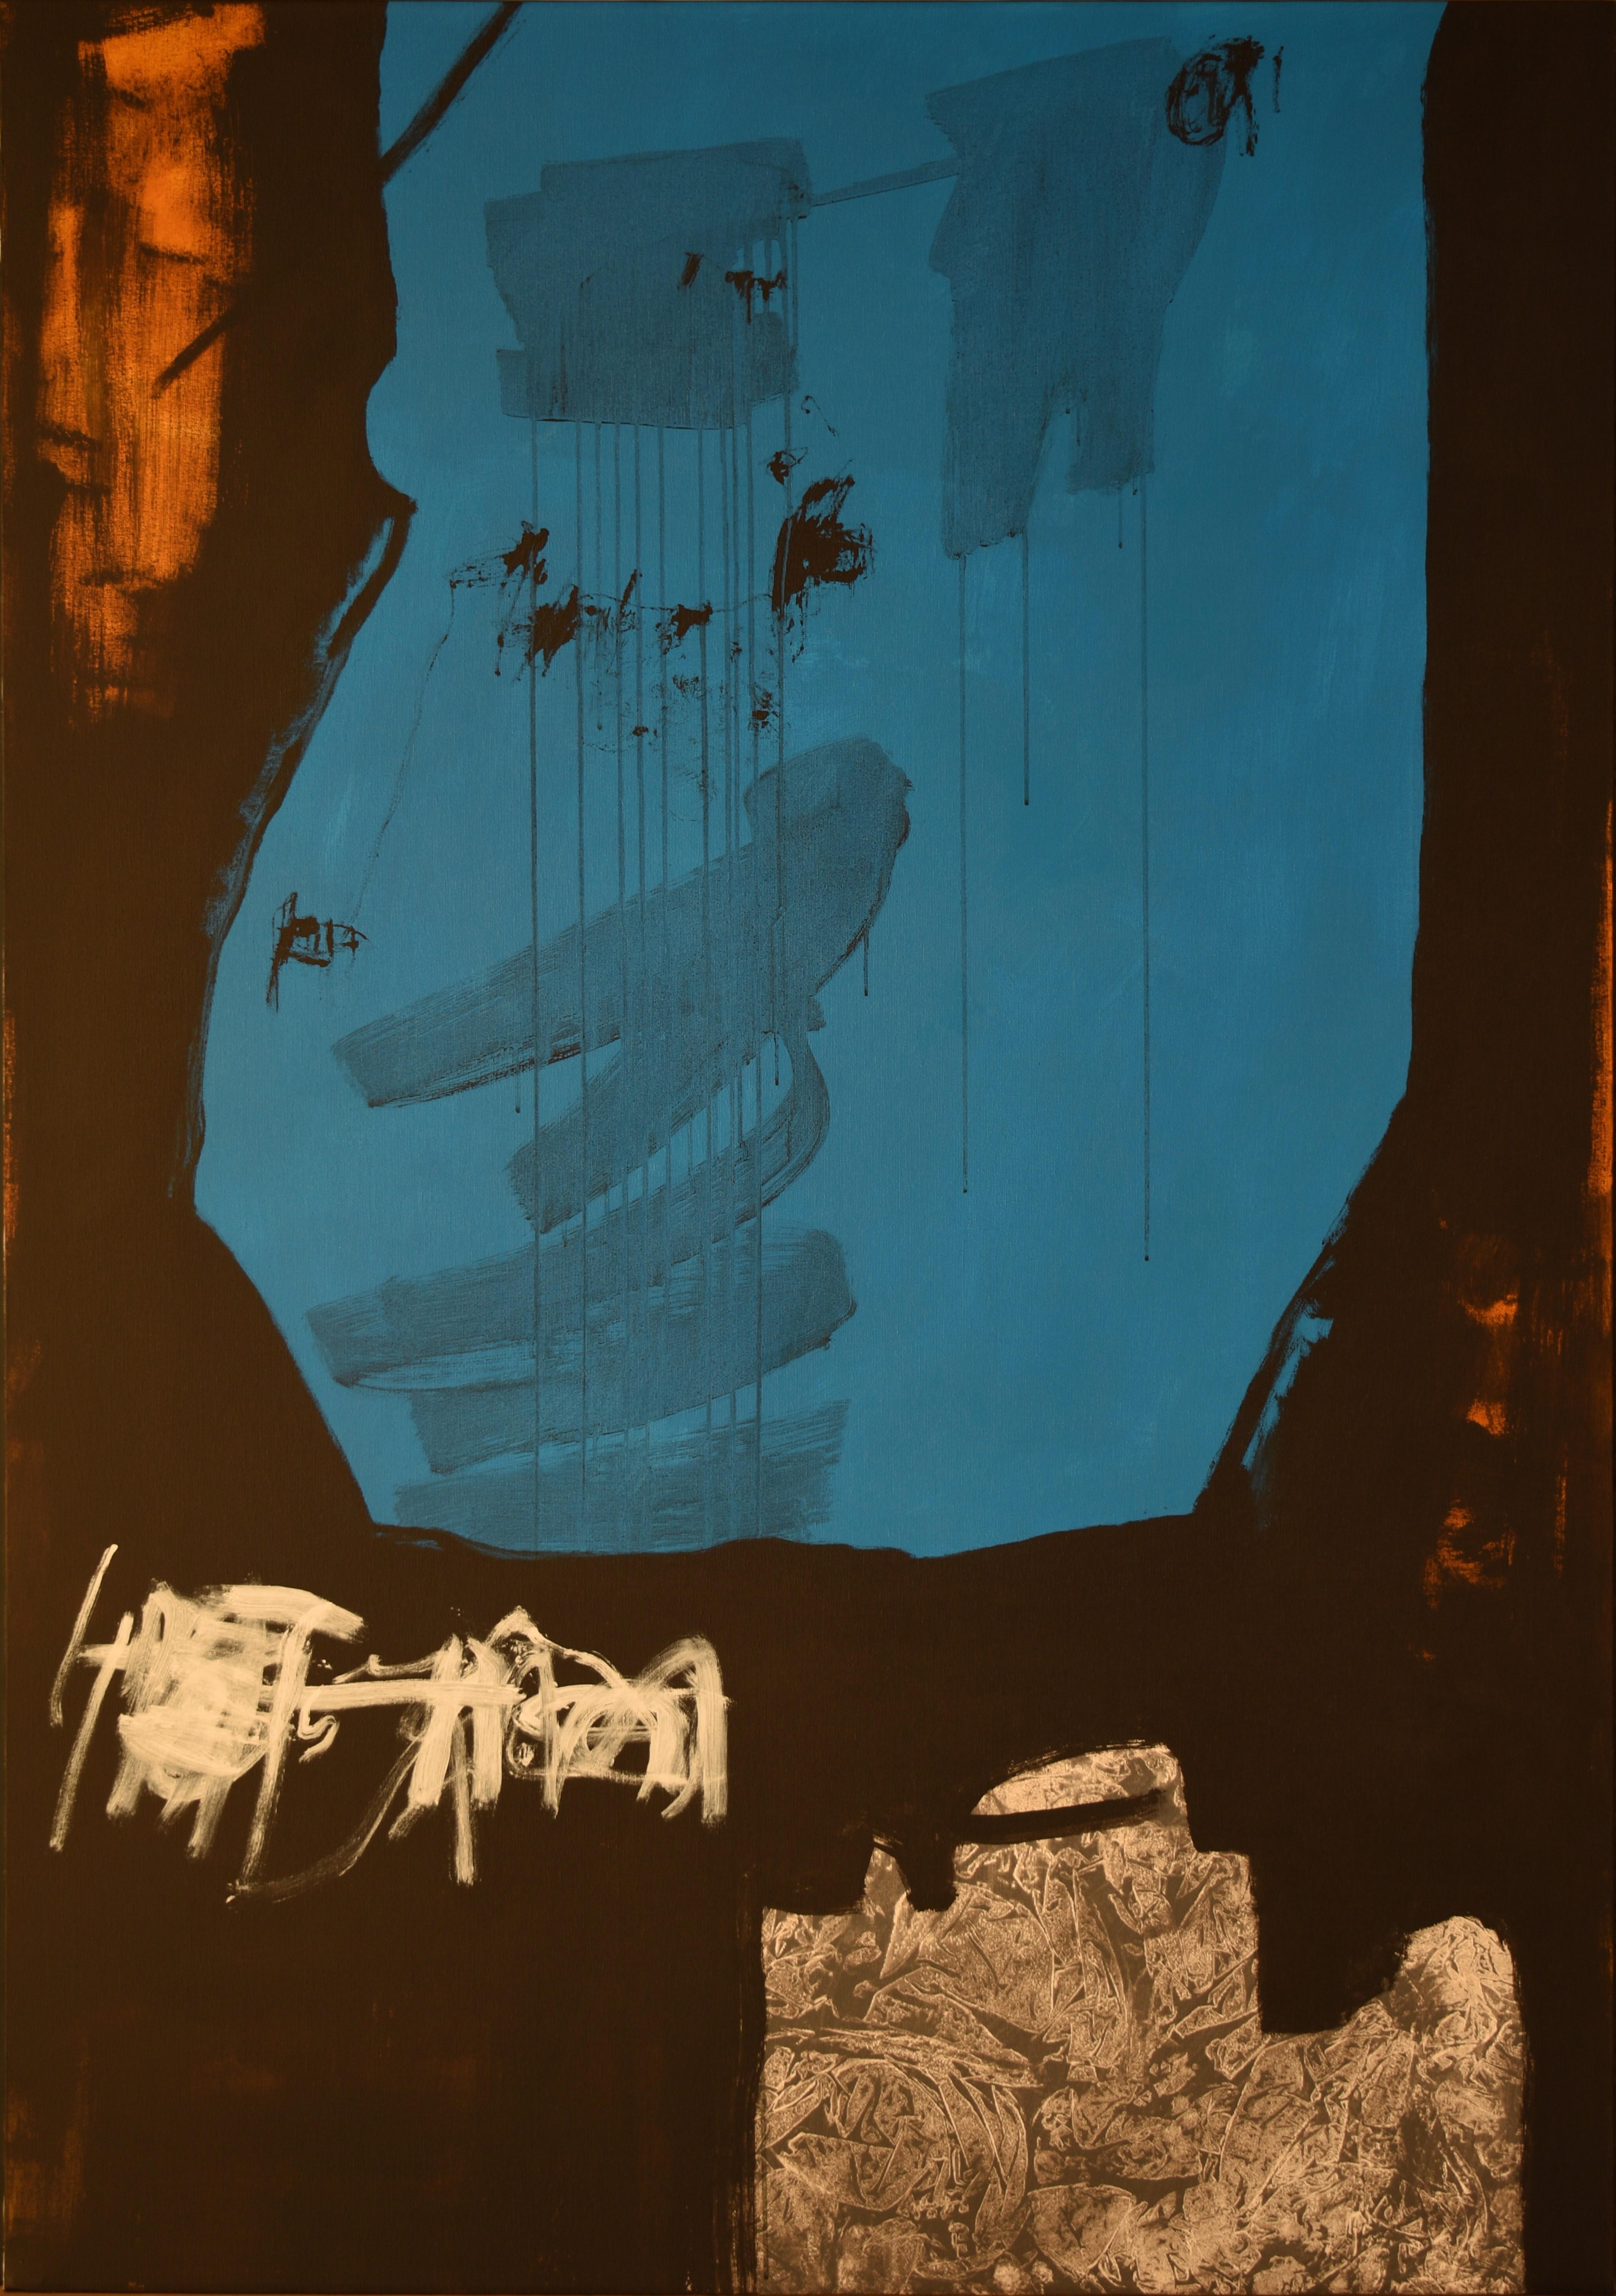 Abstract Painting RAFAEL RUZ - Ruz 18.1  Noir  Bigli  Vertical  Bleu  Danza - Acrylique abstraite  Peinture sur toile